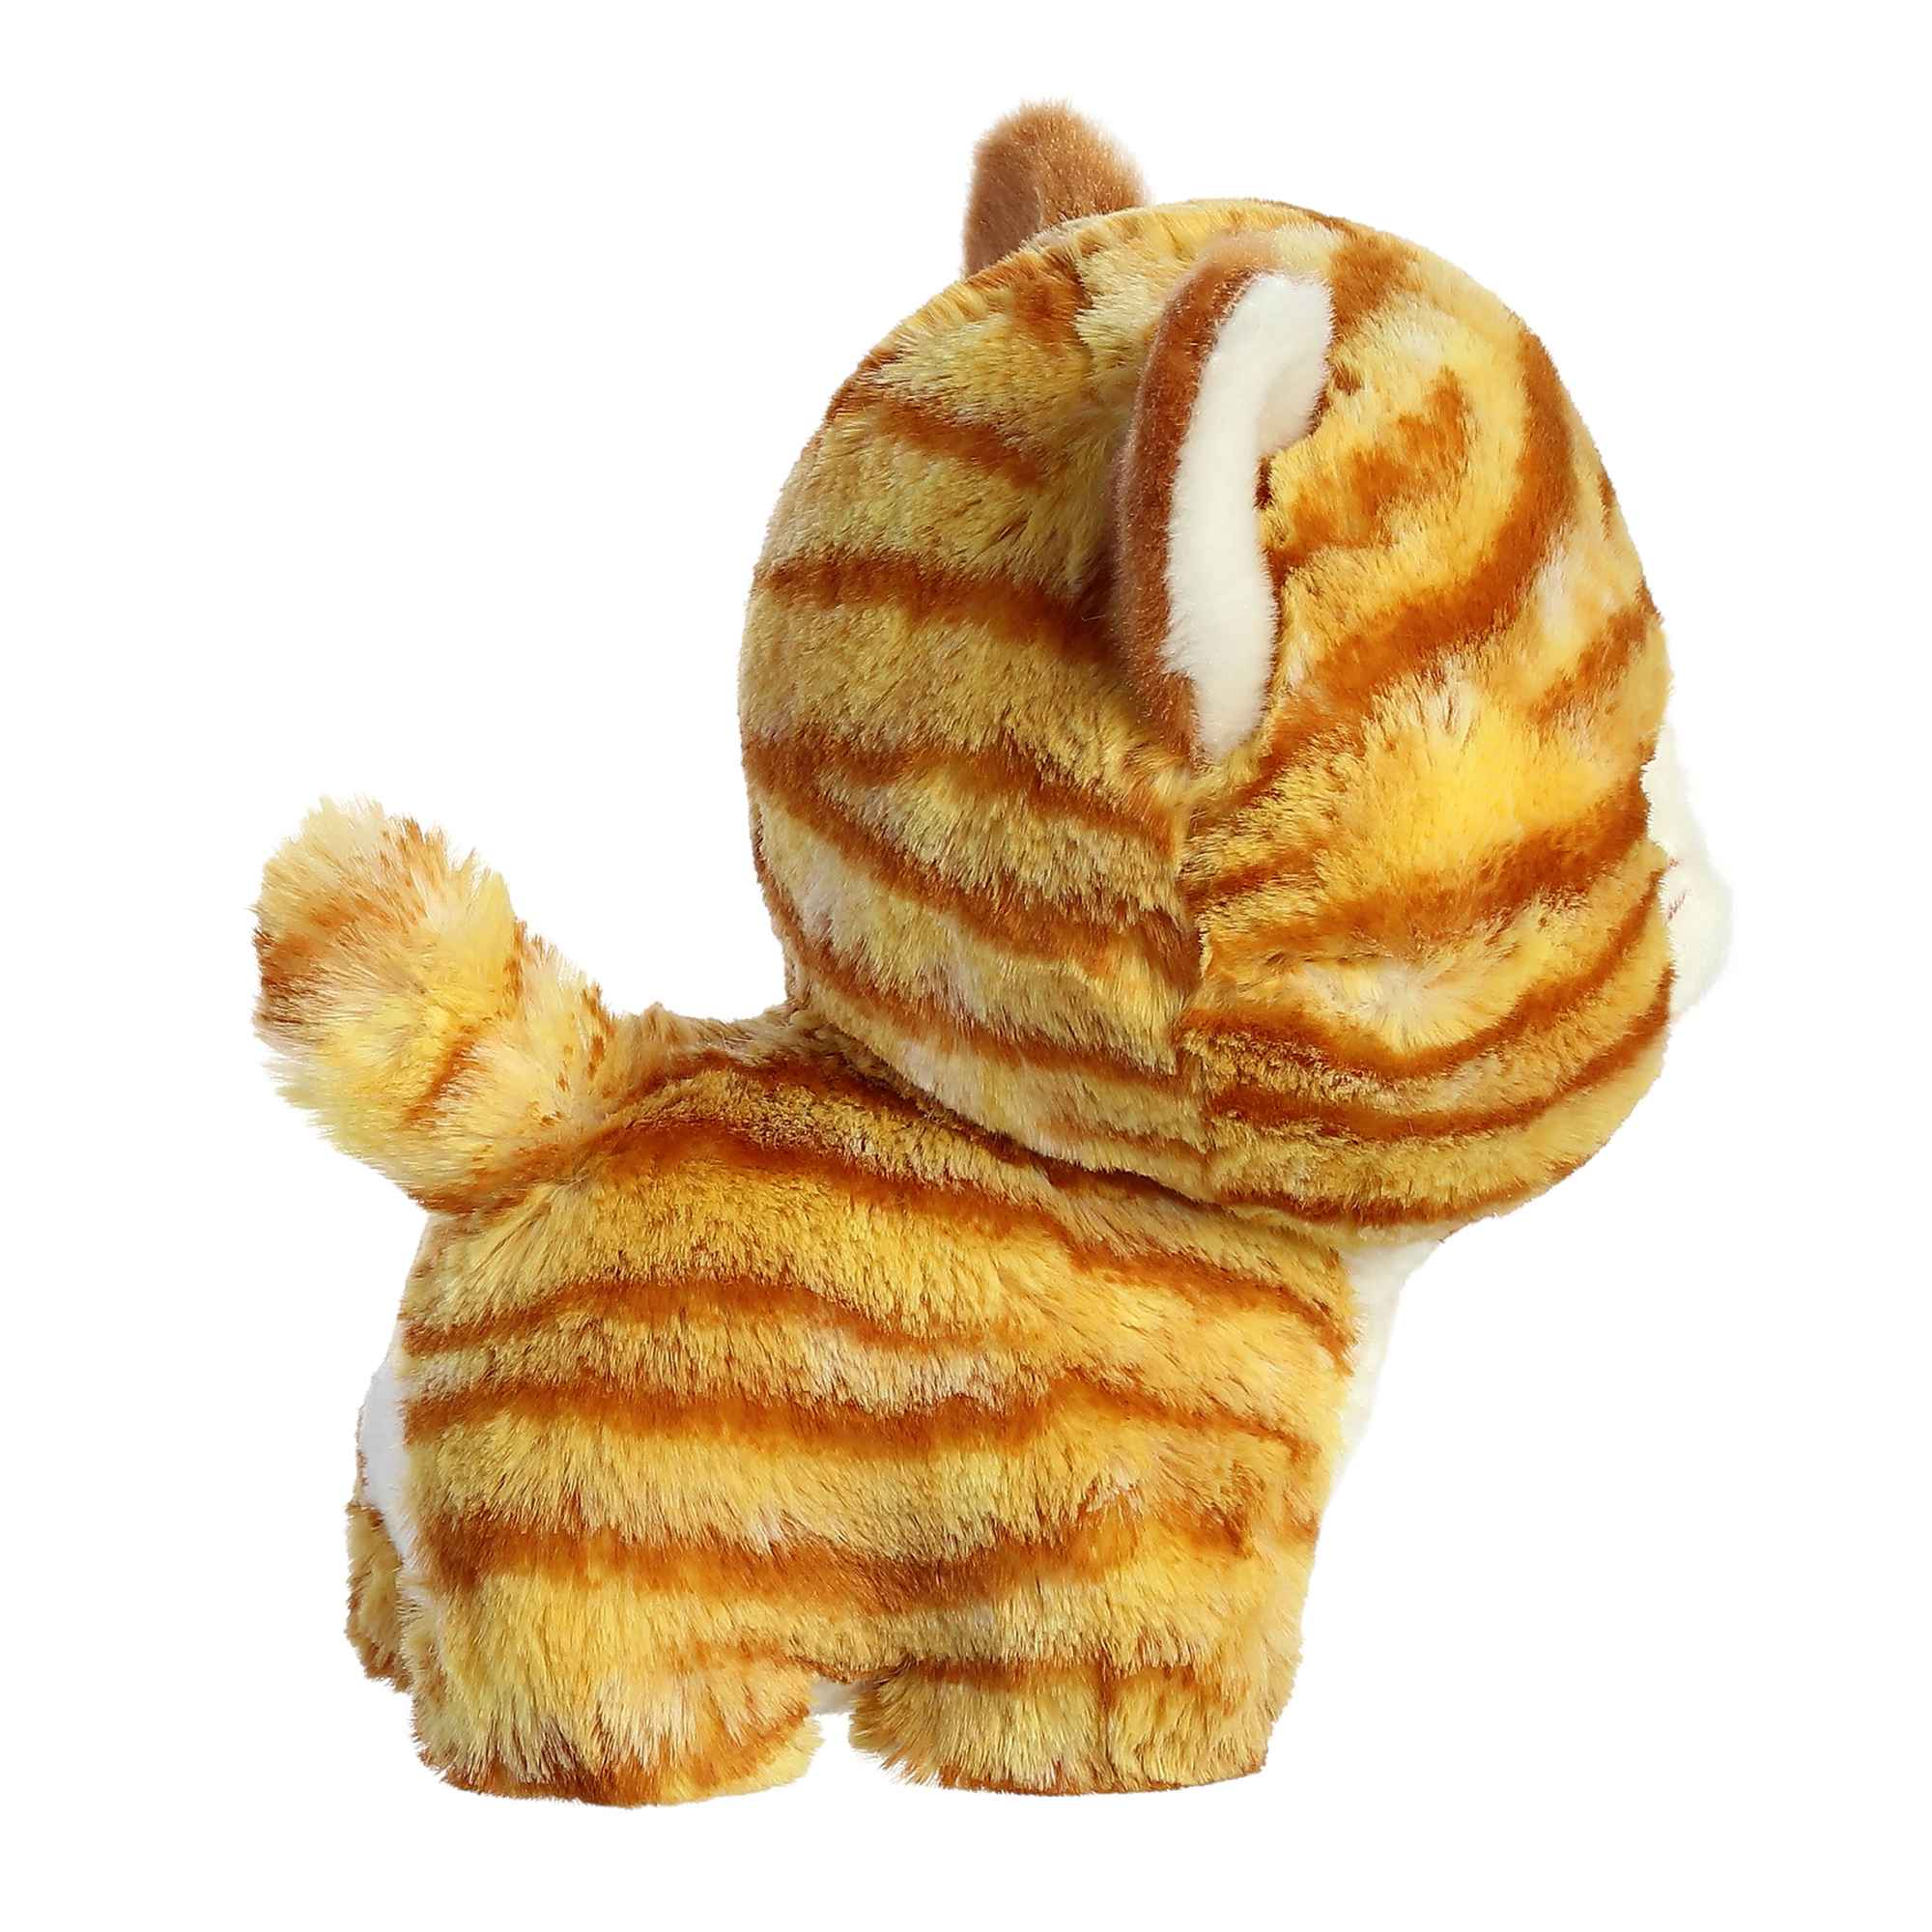 Orange Tabby Cat | Aurora Teddy Pets